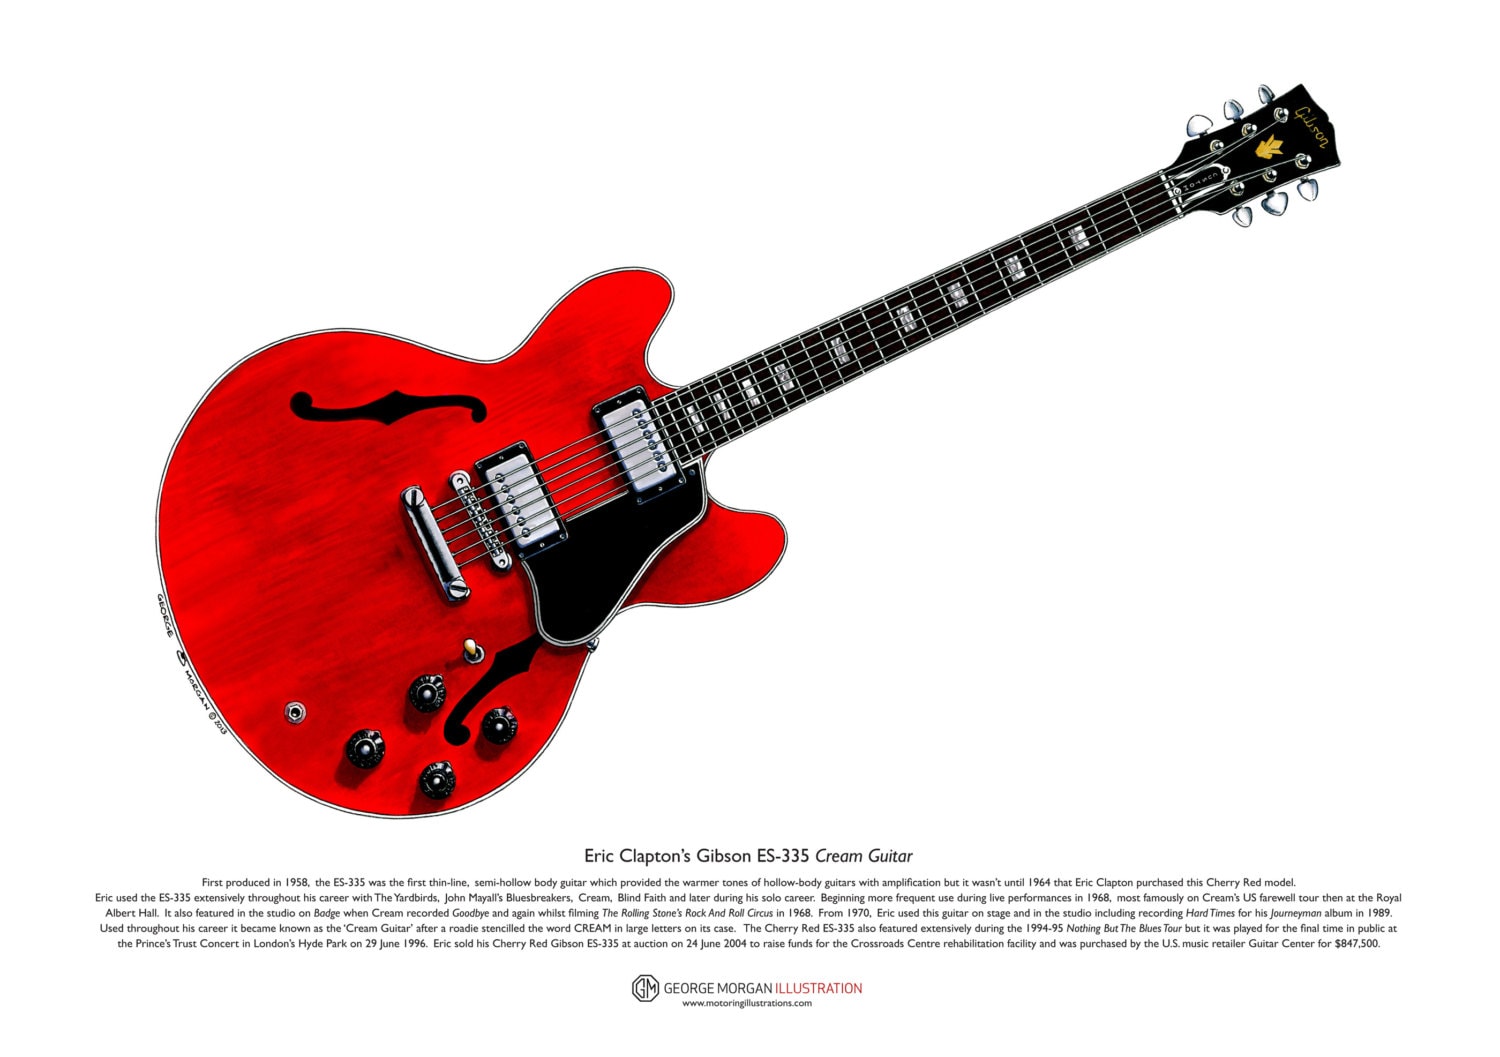 Eric Claptons Gibson ES-335 Cream Guitar ART POSTER A3 size